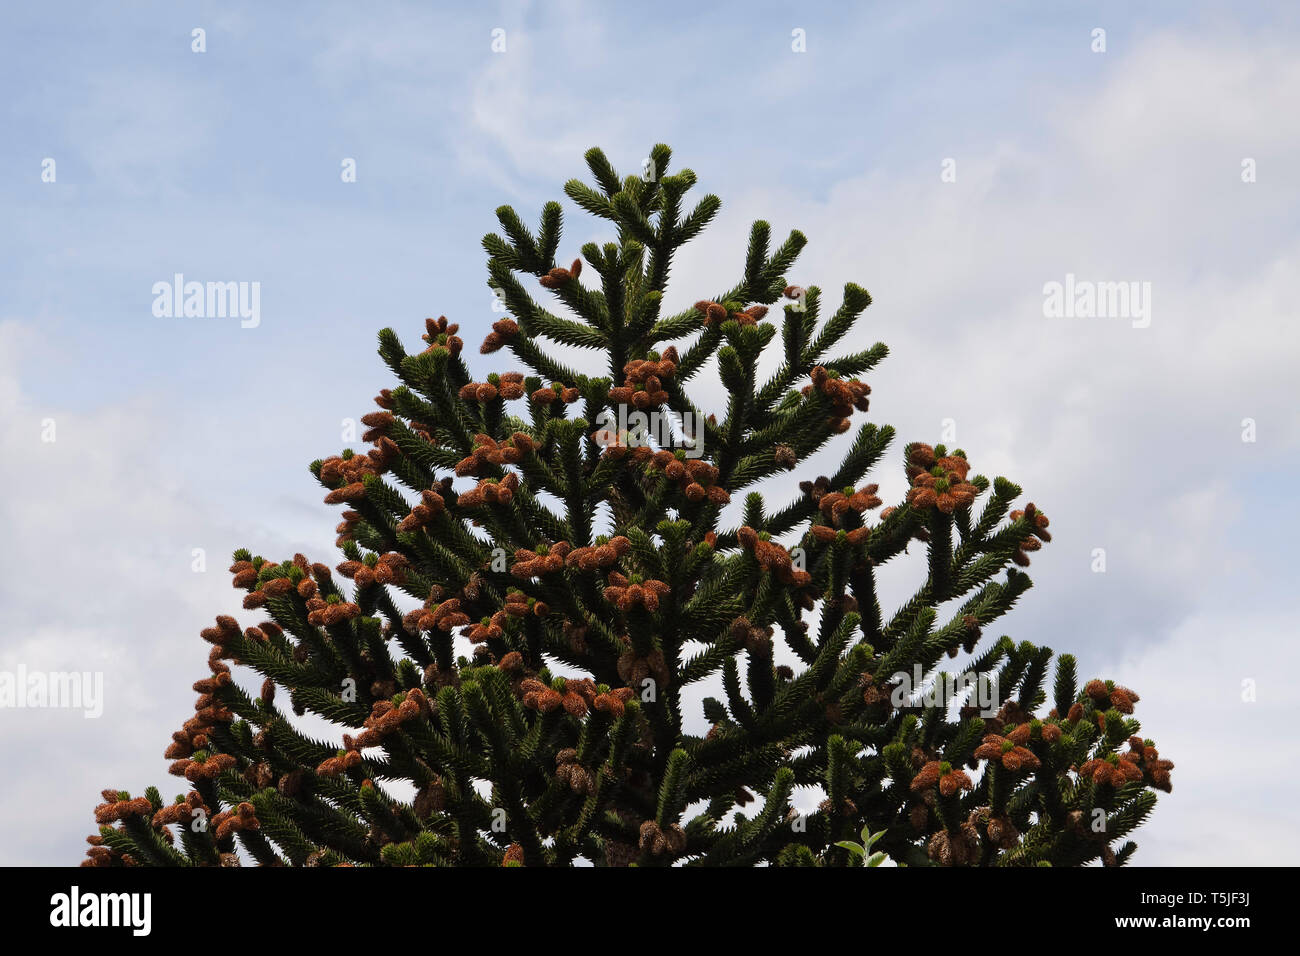 Araucaria araucana (commonly called the monkey puzzle tree, monkey tail tree, piñonero, or Chilean pine) is an evergreen tree Stock Photo